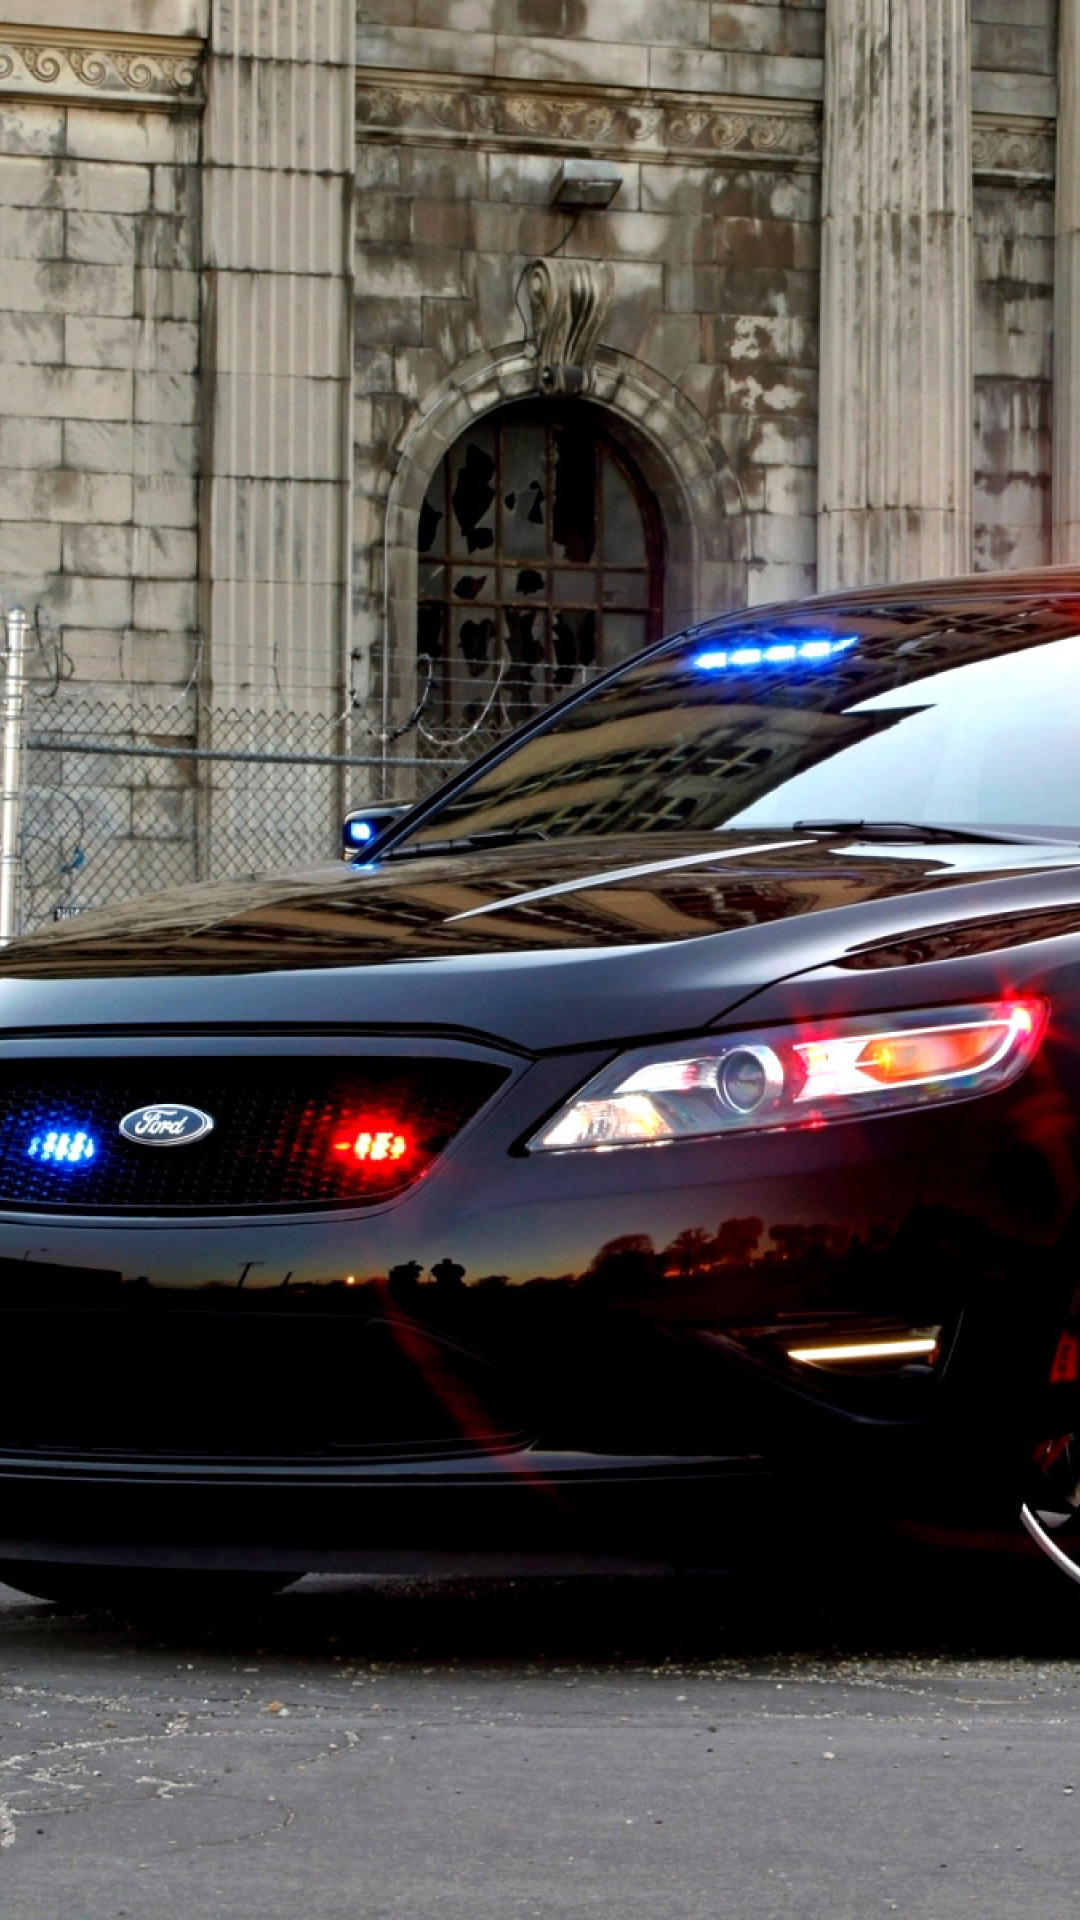 Ford Taurus Police Car wallpaper 1080x1920